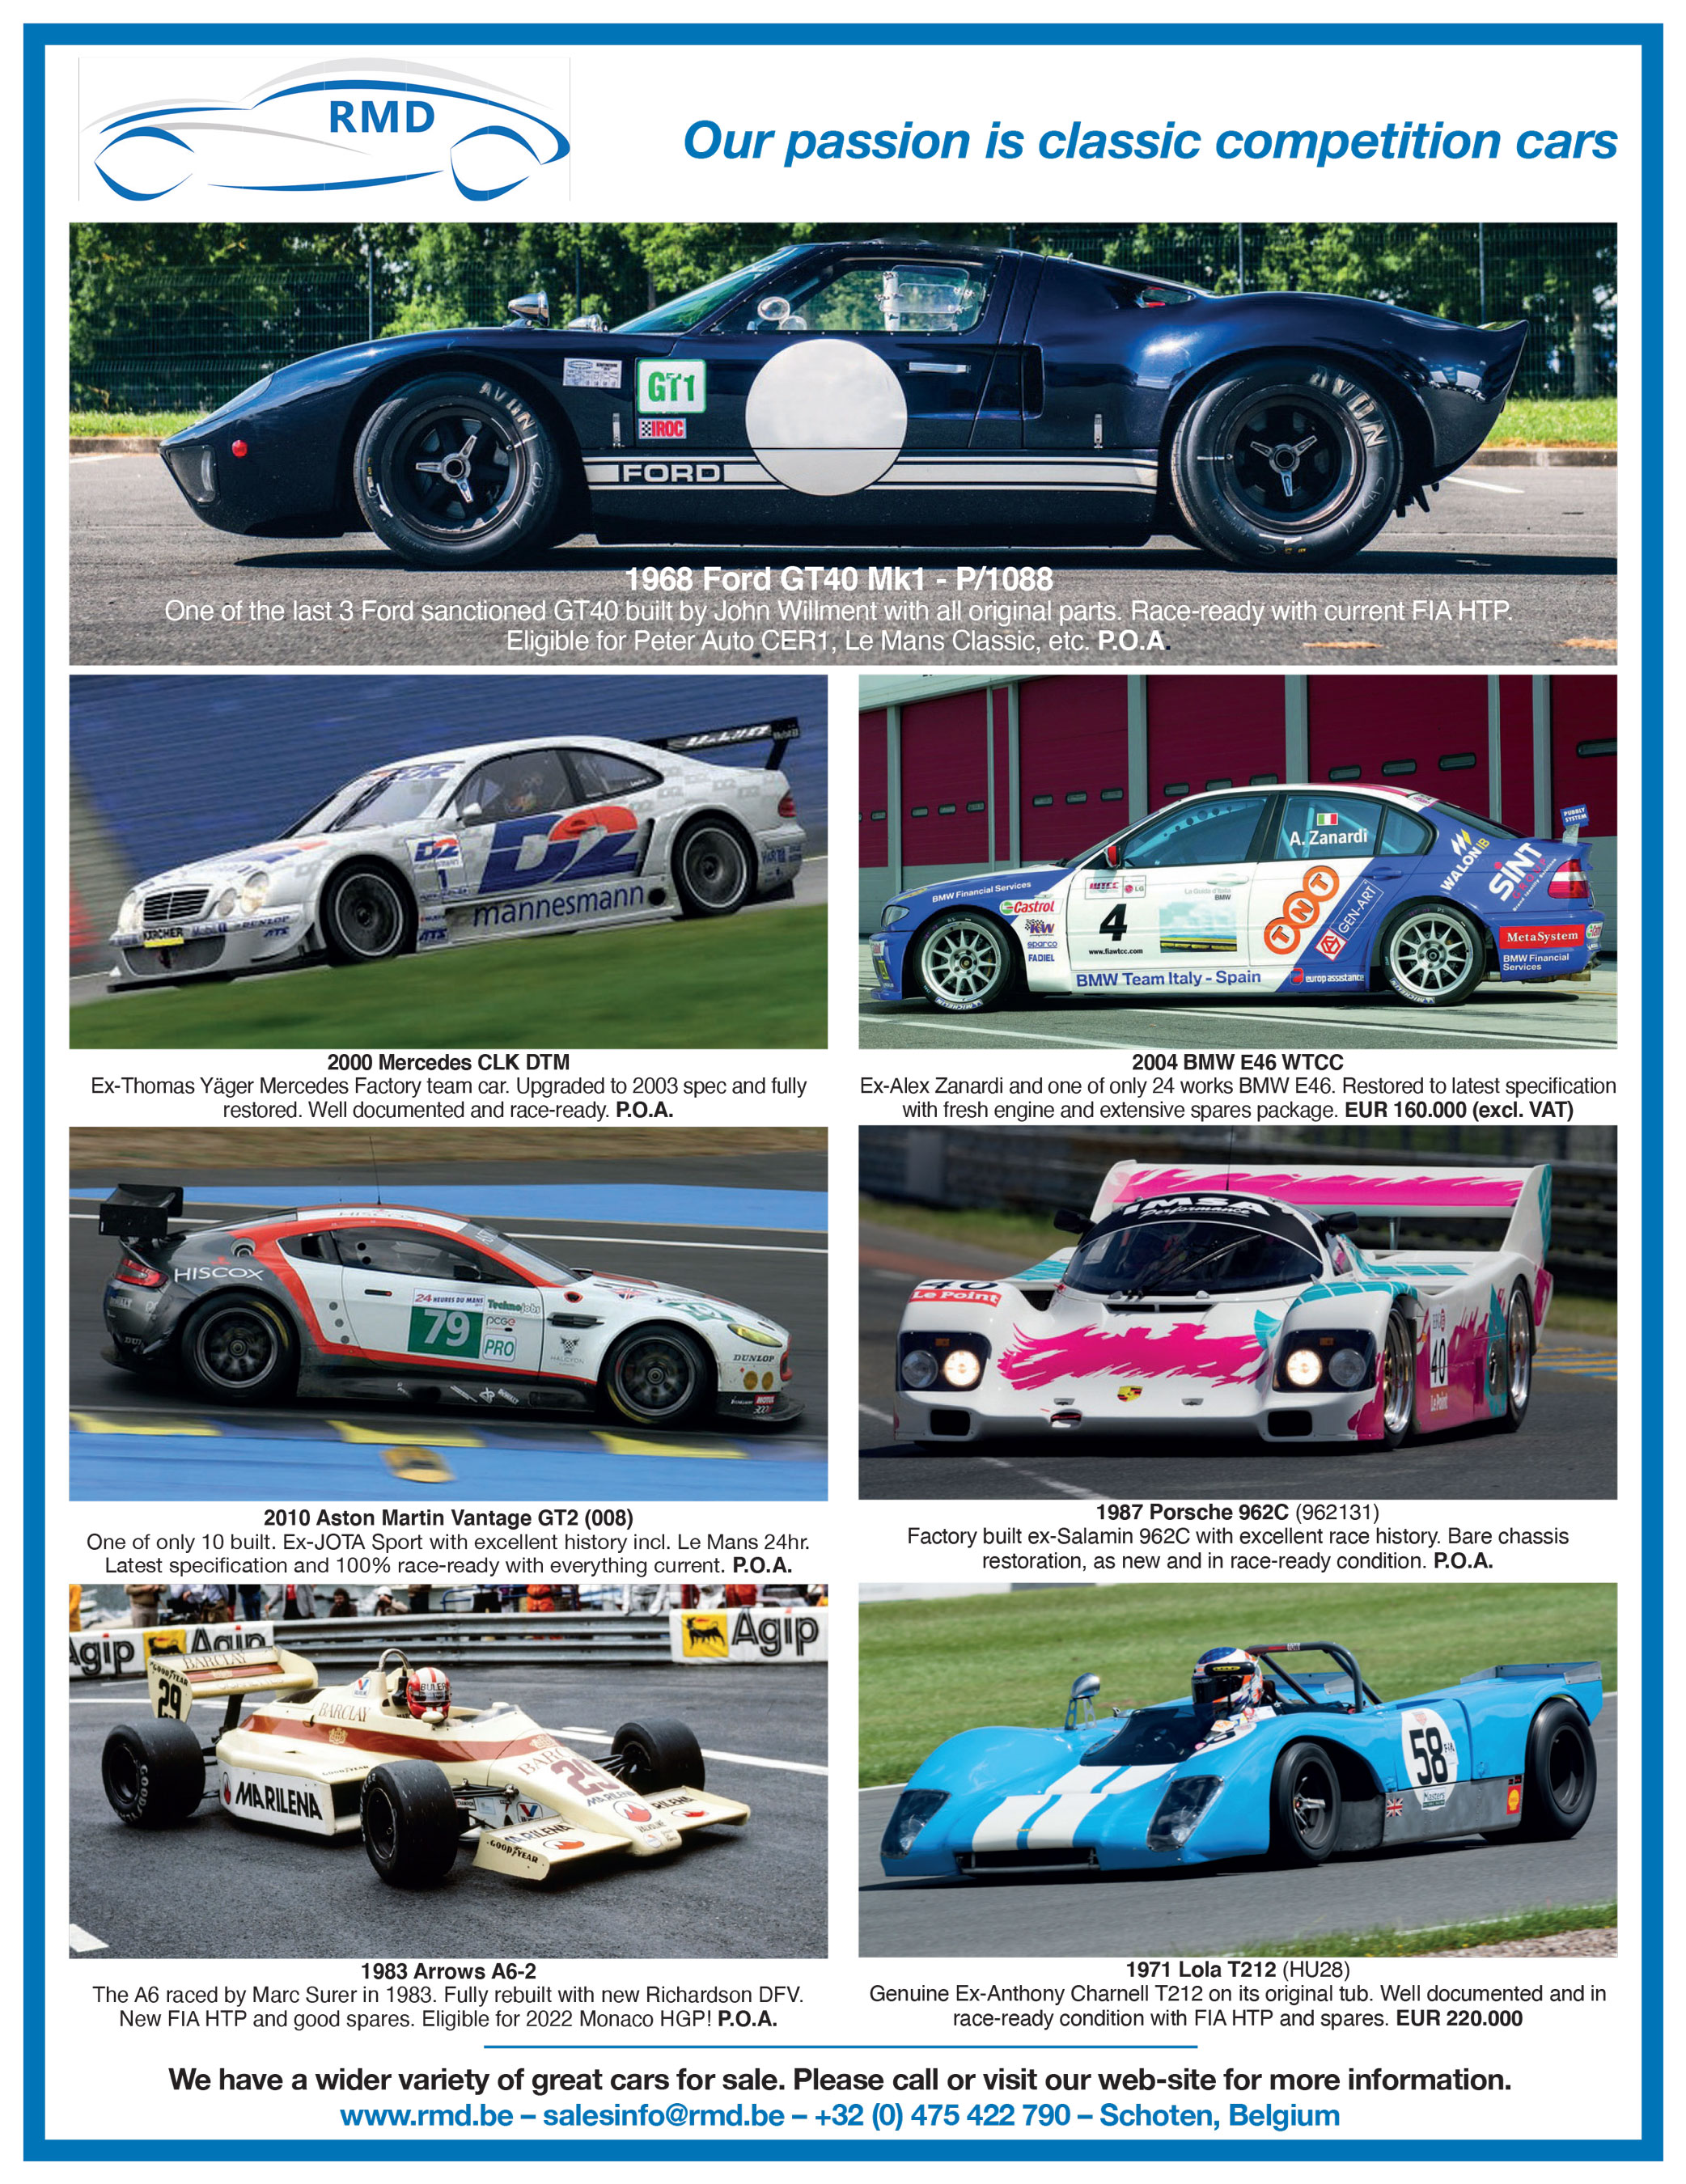 Peugeot 205 GTI: Road car buying guide - Motor Sport Magazine